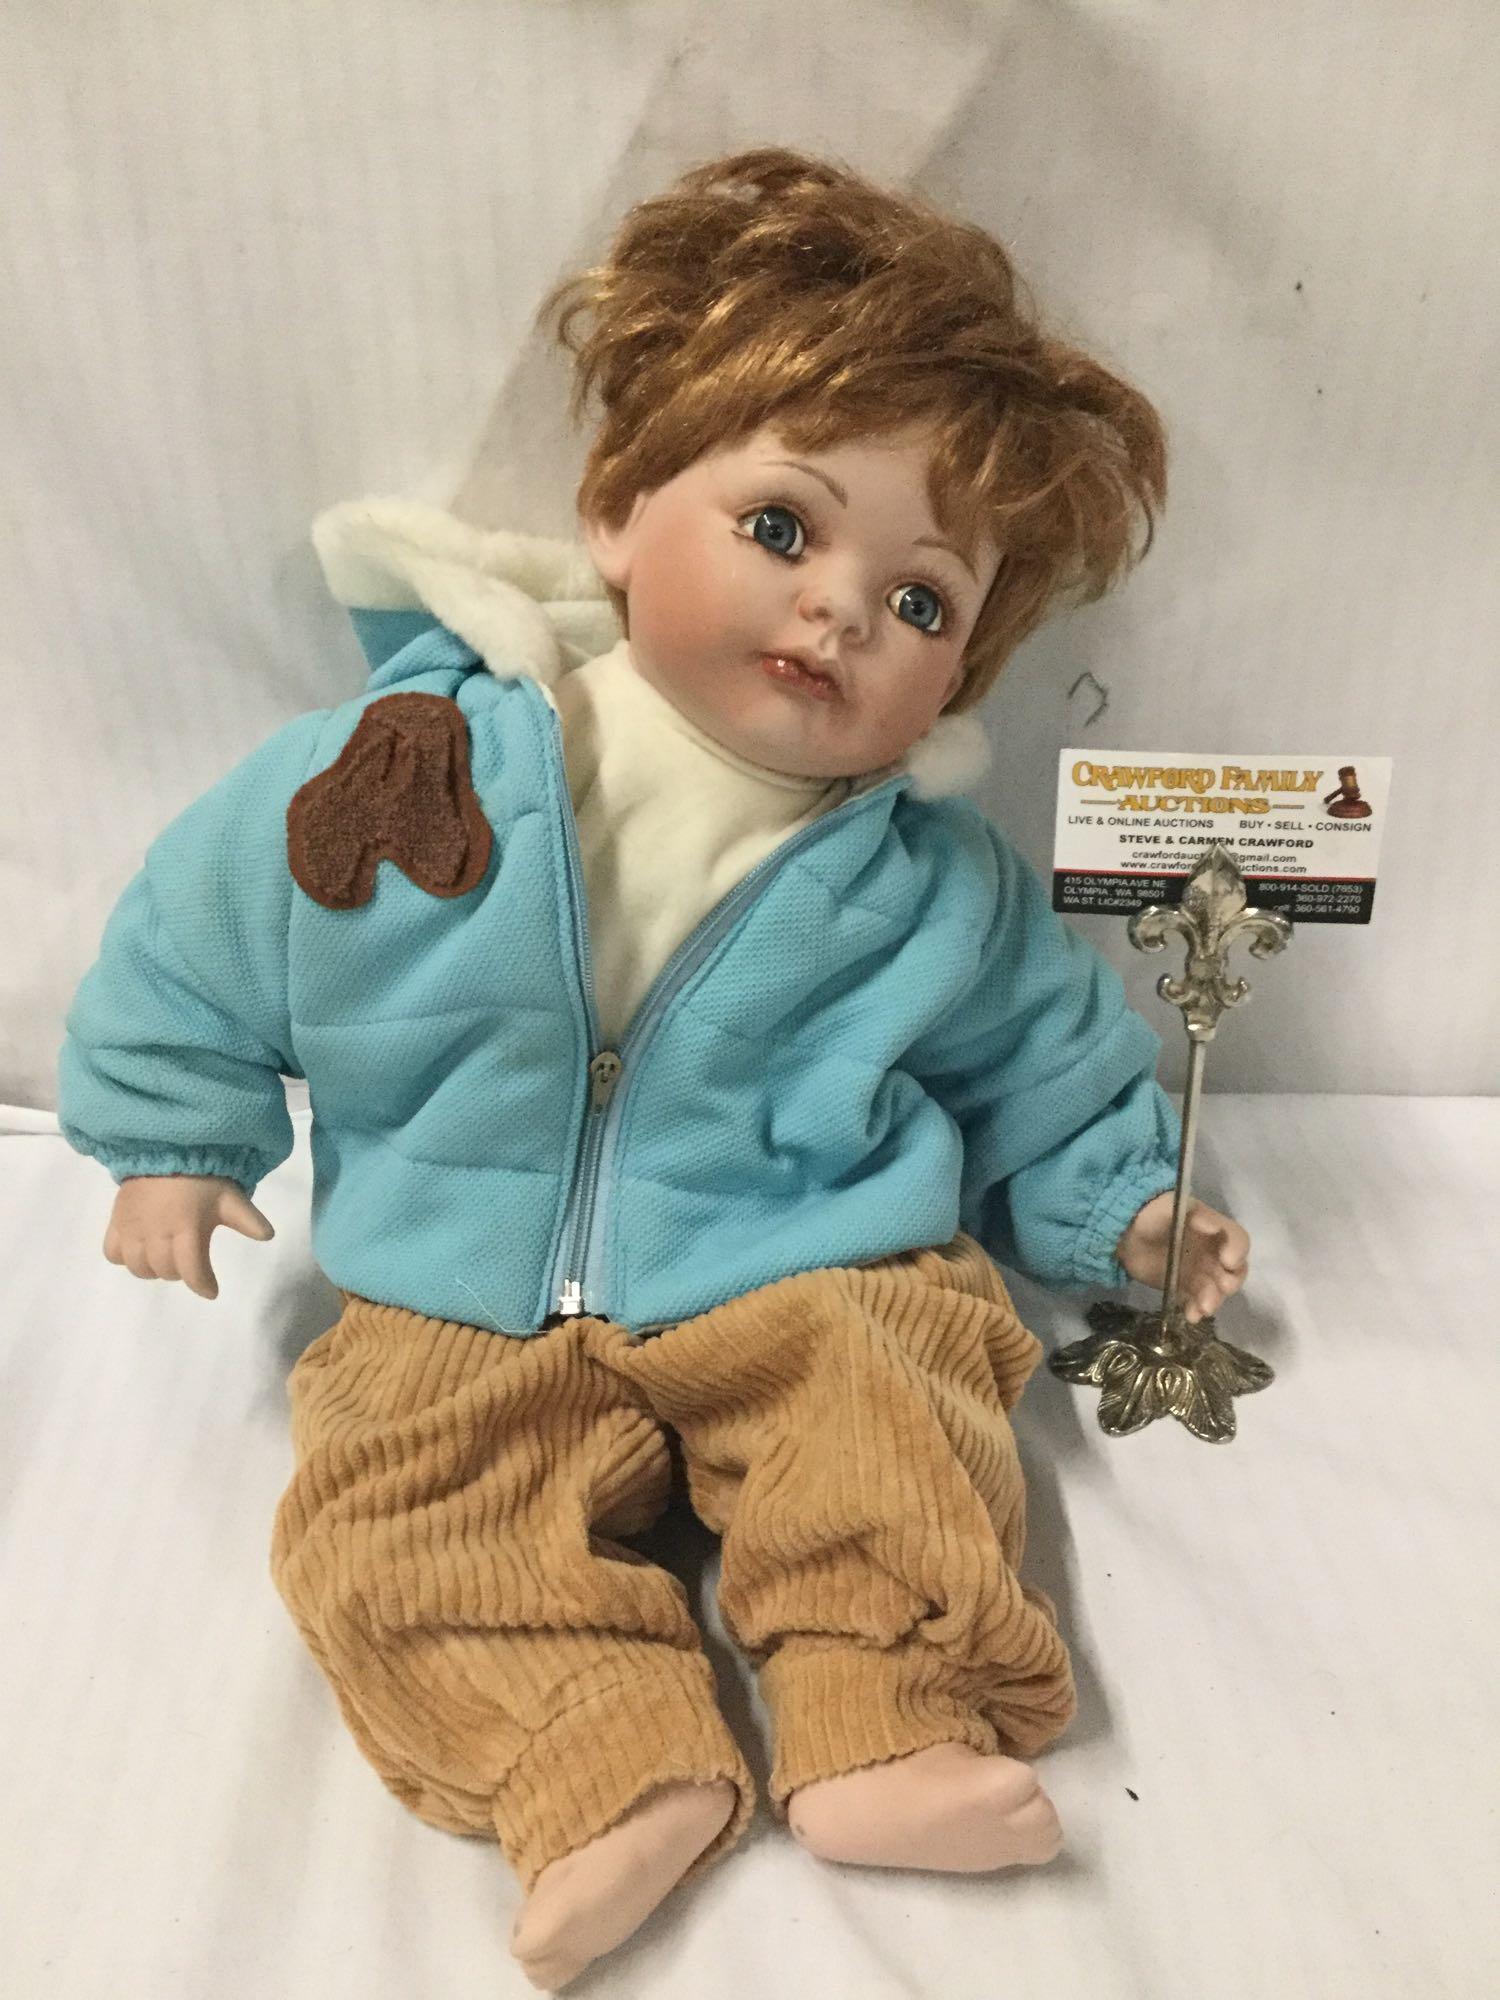 Duck House Limited Edition heirloom dolls | Proxibid